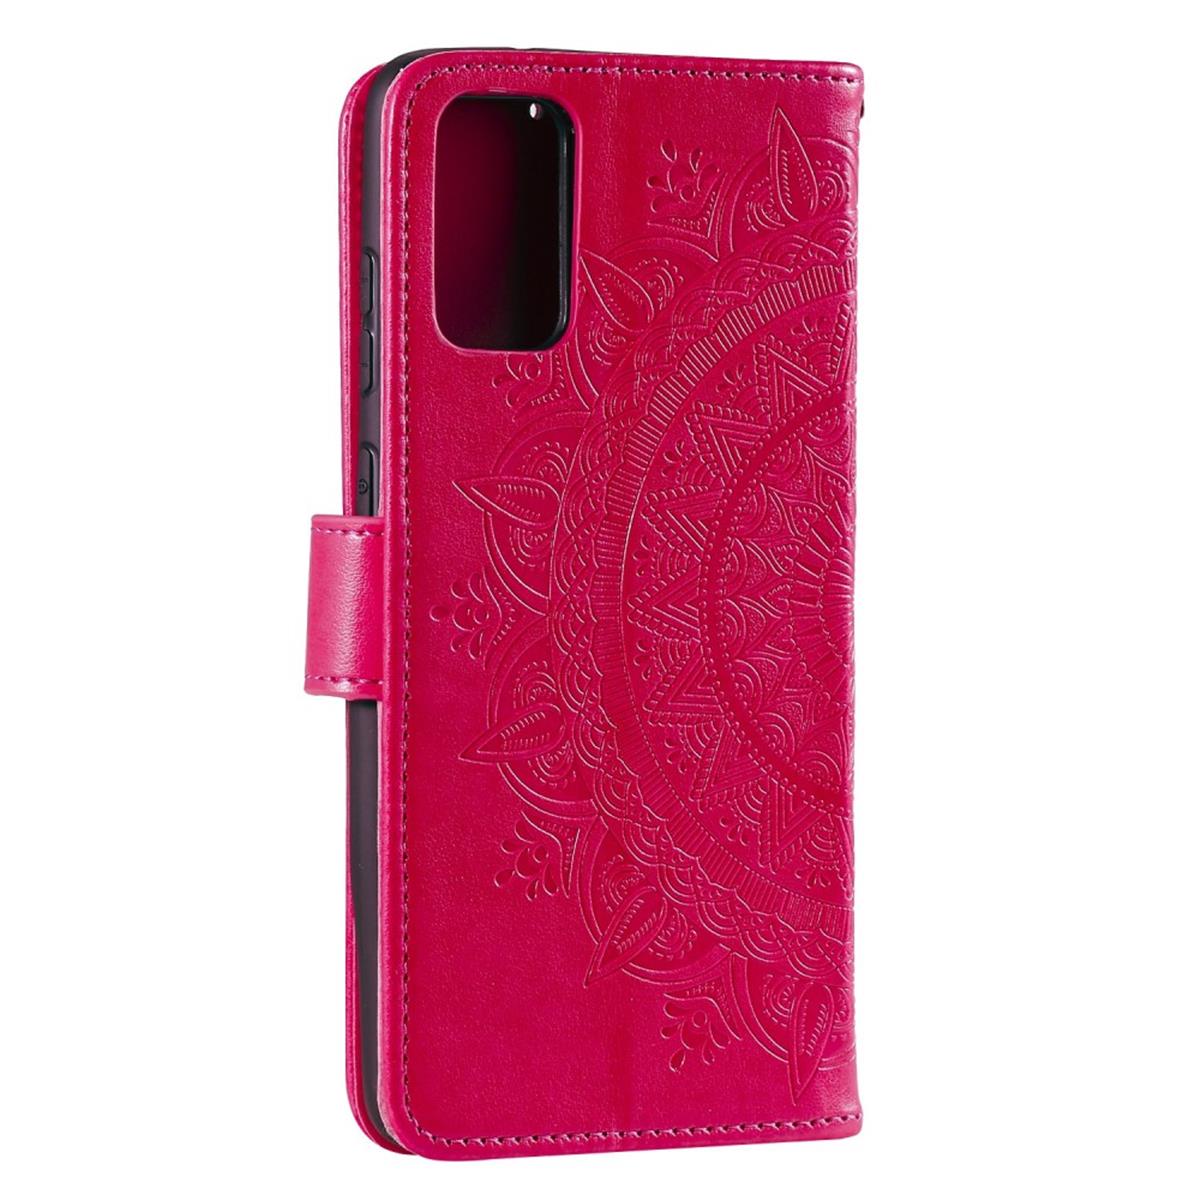 Hülle für Samsung Galaxy A72 Handyhülle Flip Case Cover Schutzhülle Tasche Mandala Pink